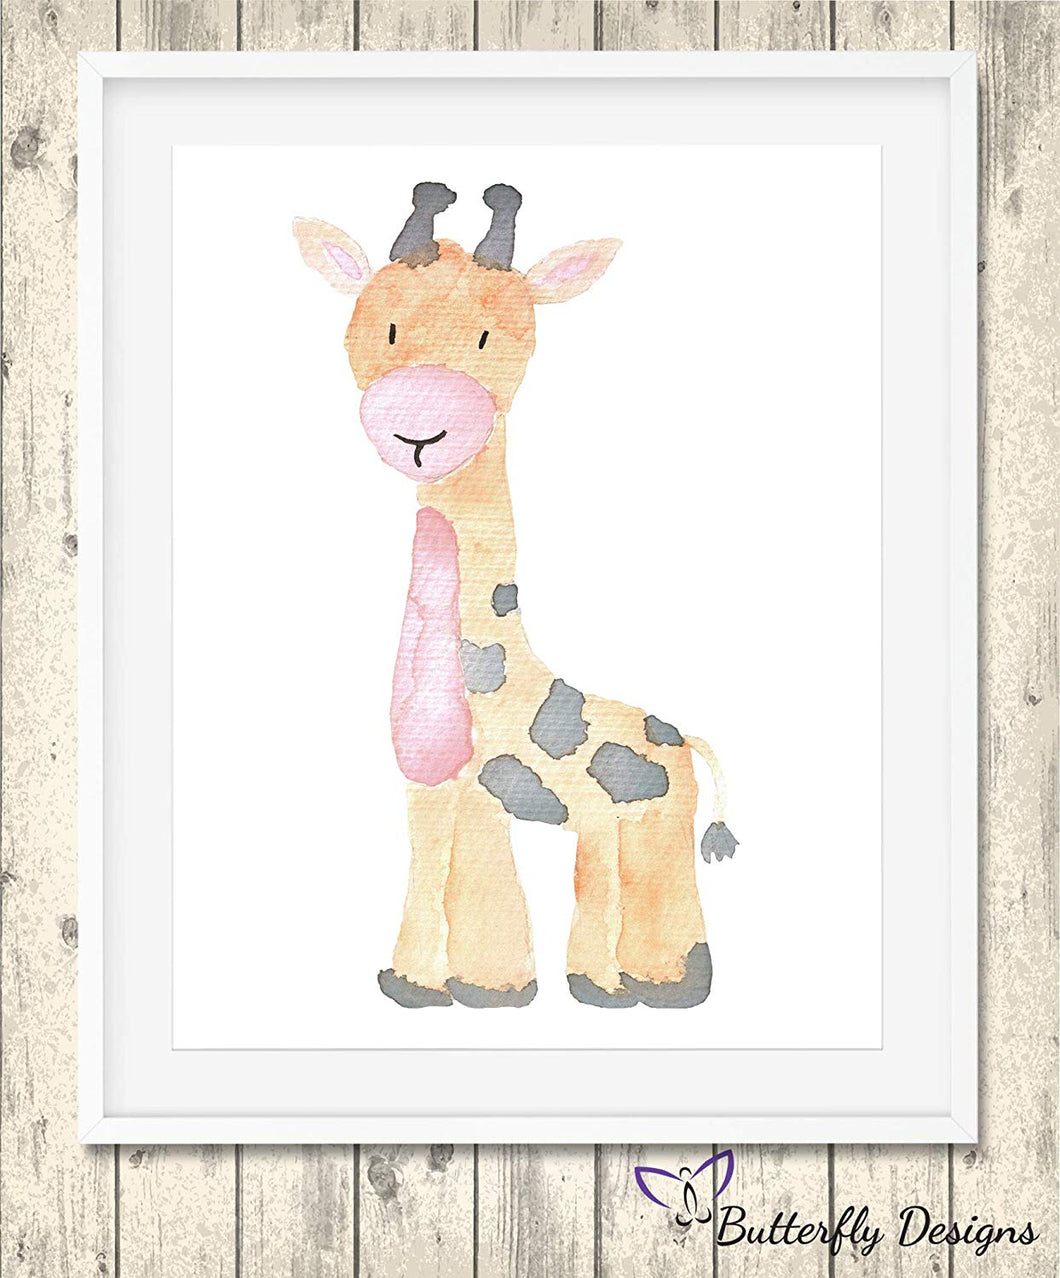 Giraffe Watercolour Wildlife Animal A4 Print Picture